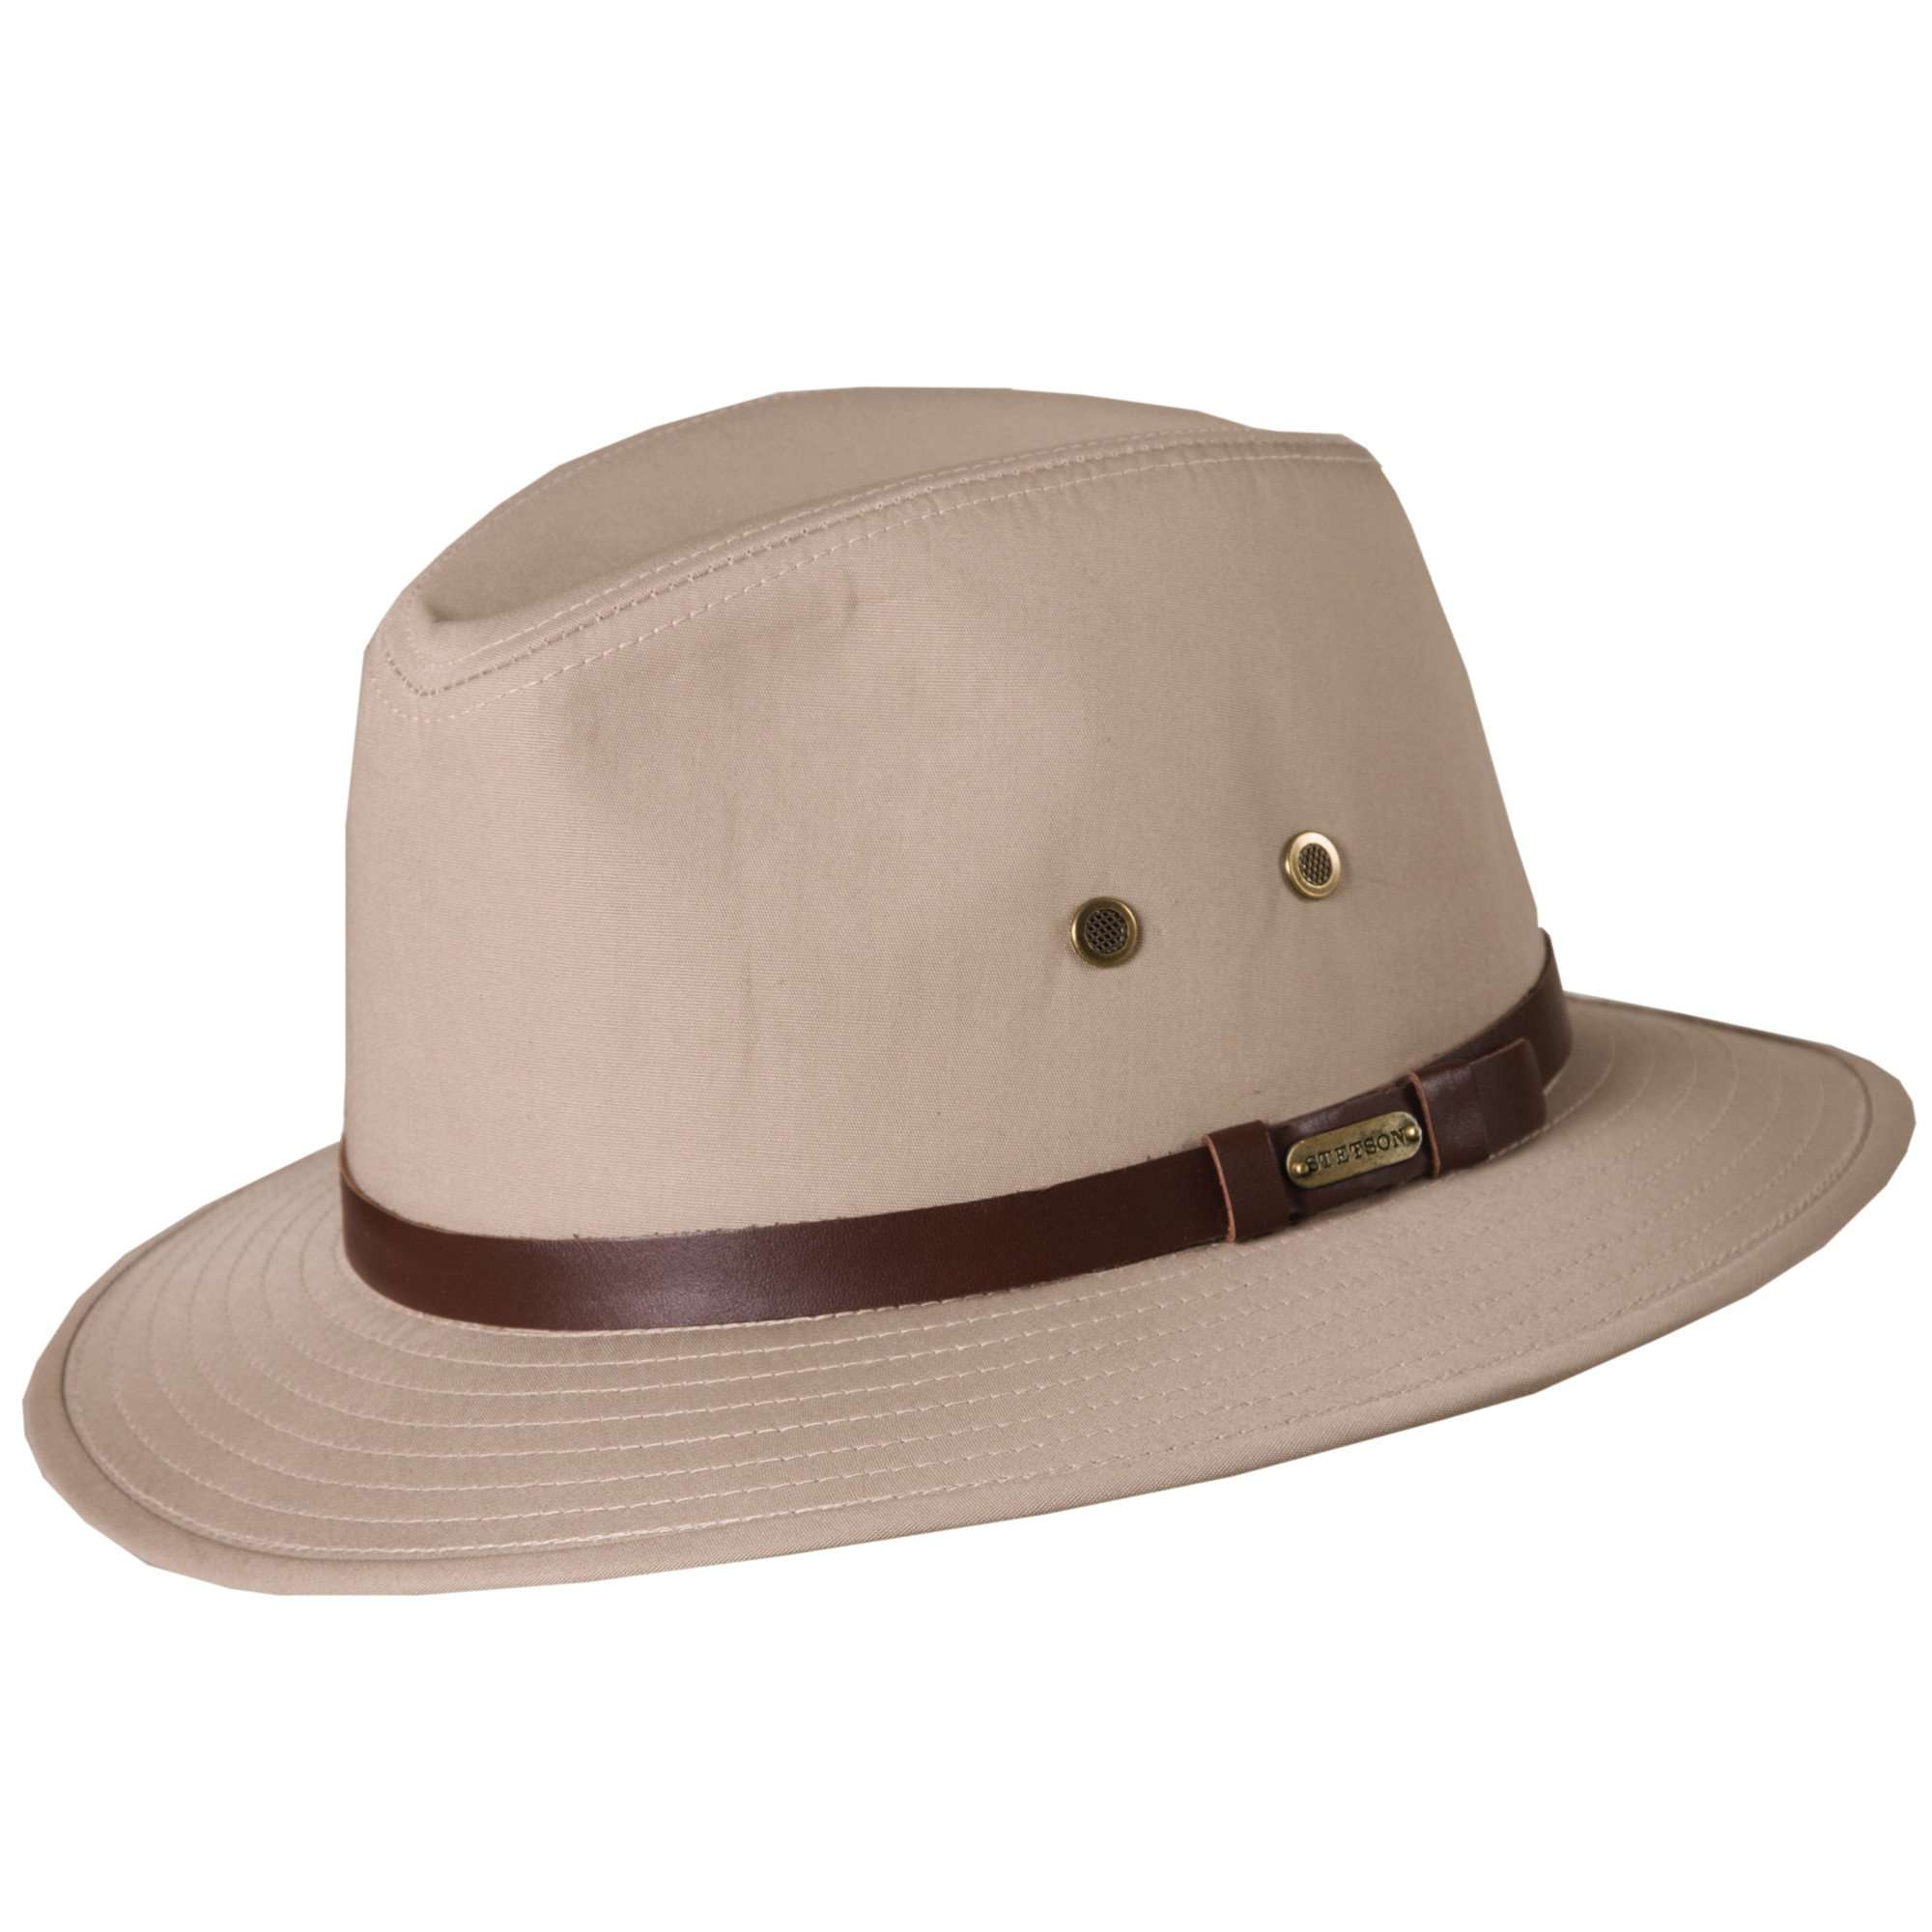 Men's Safari Style Rain Hat - Stetson Hats Safari Hat Stetson Hats STC61-KAKI3 Khaki Large 